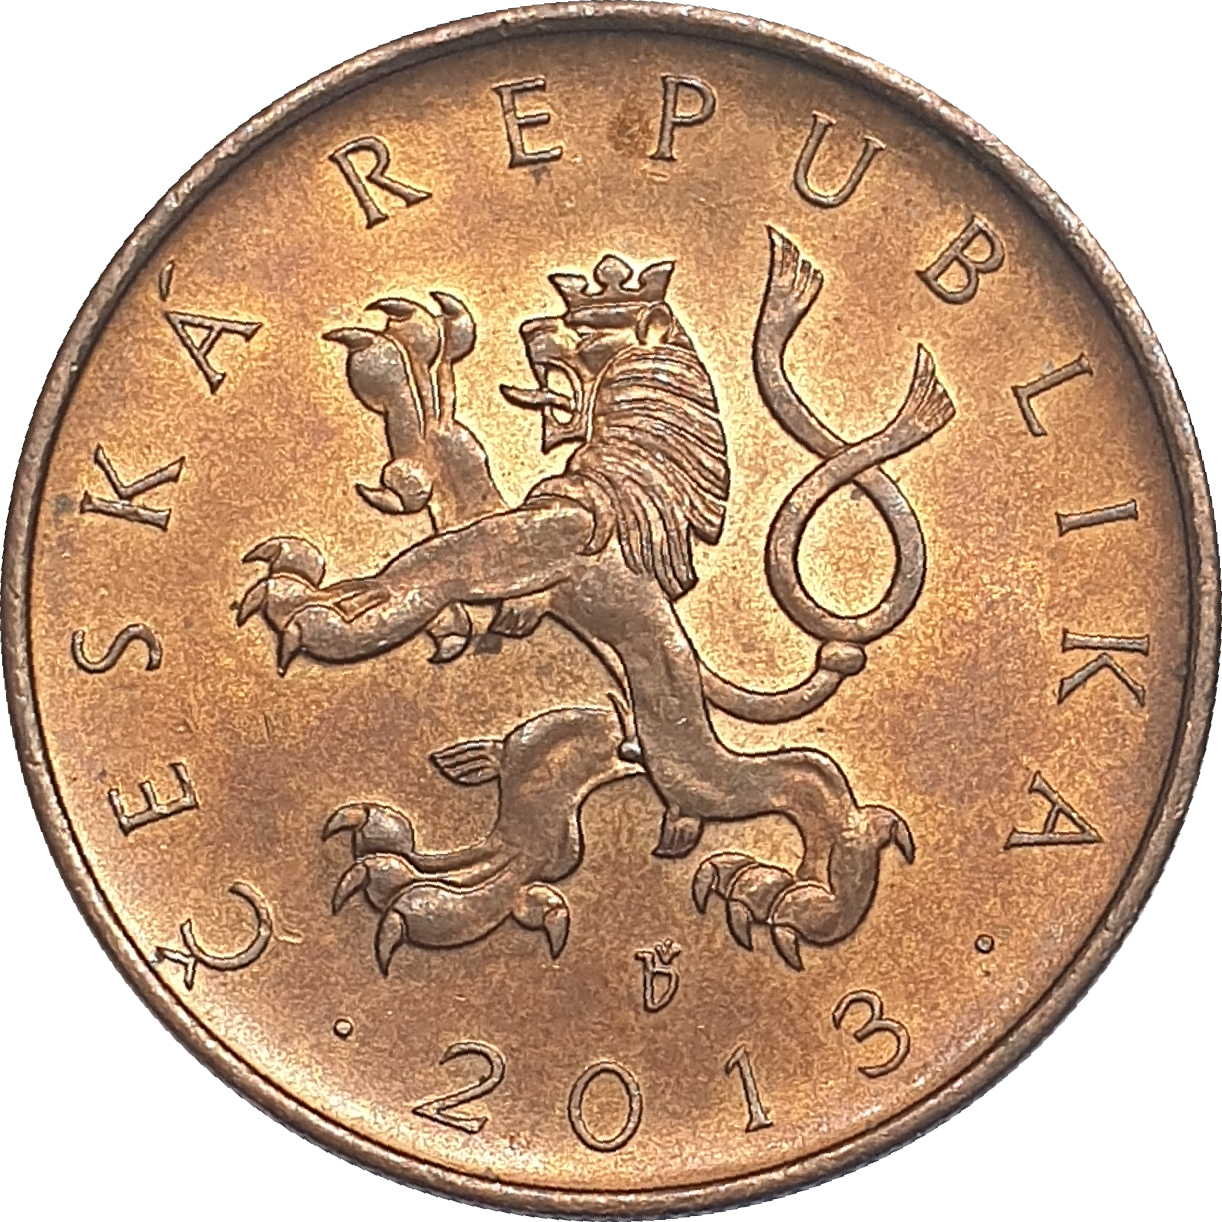 10 korun - Heraldic Lion